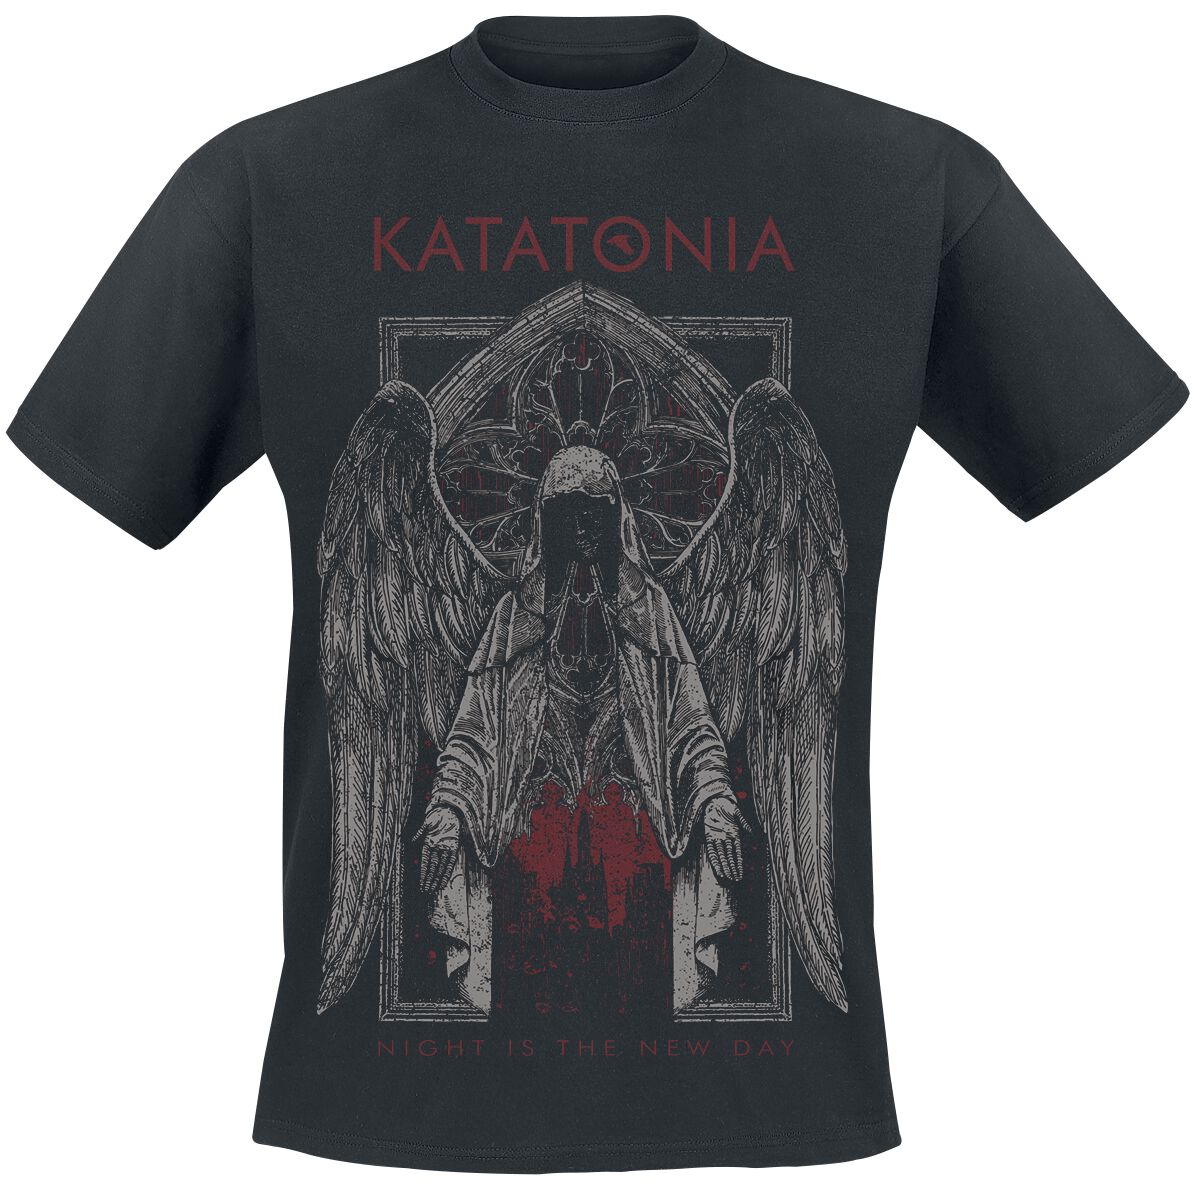 Night is the new day T-Shirt schwarz von Katatonia